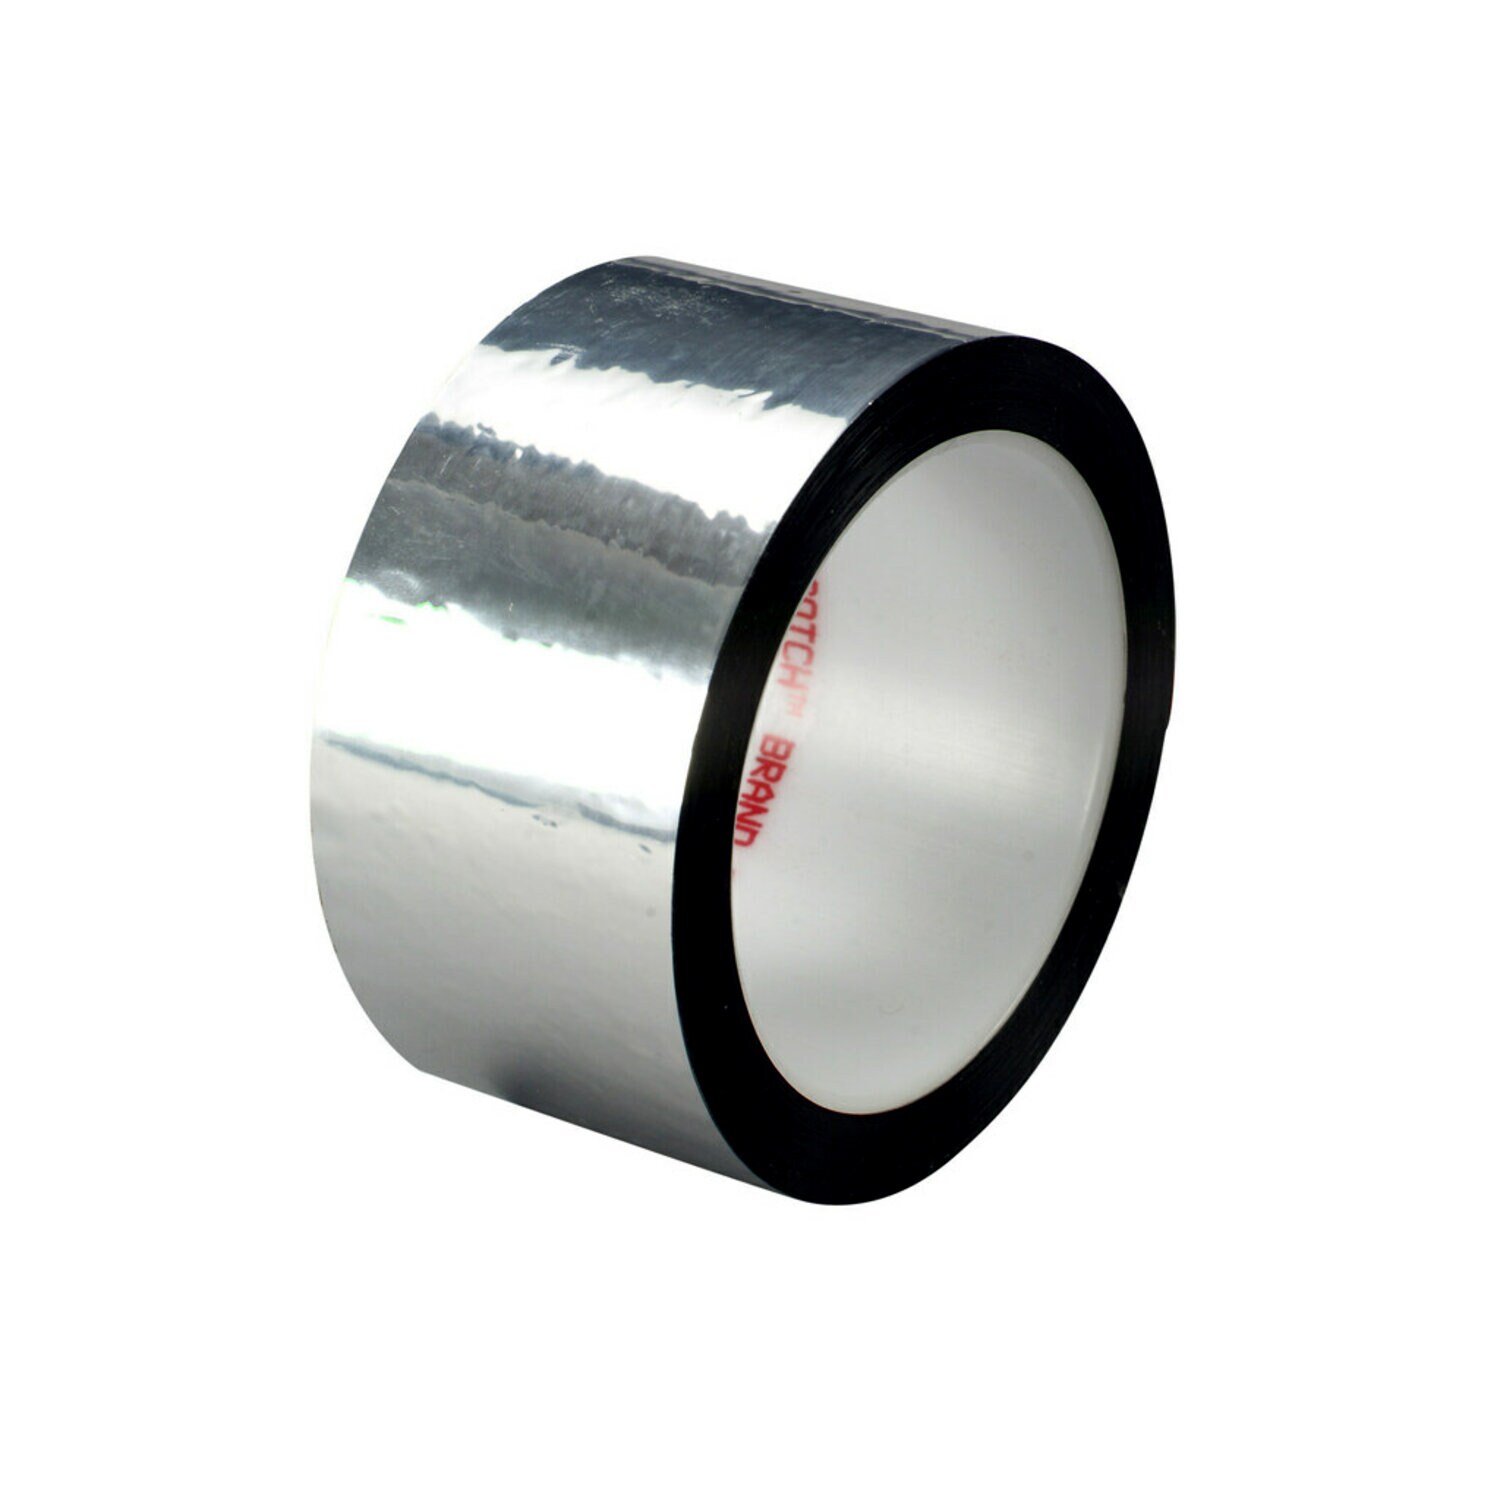 7010045014 - 3M Polyester Film Tape 850, Silver, 3 in x 72 yd, 1.9 mil, 12 rolls per case